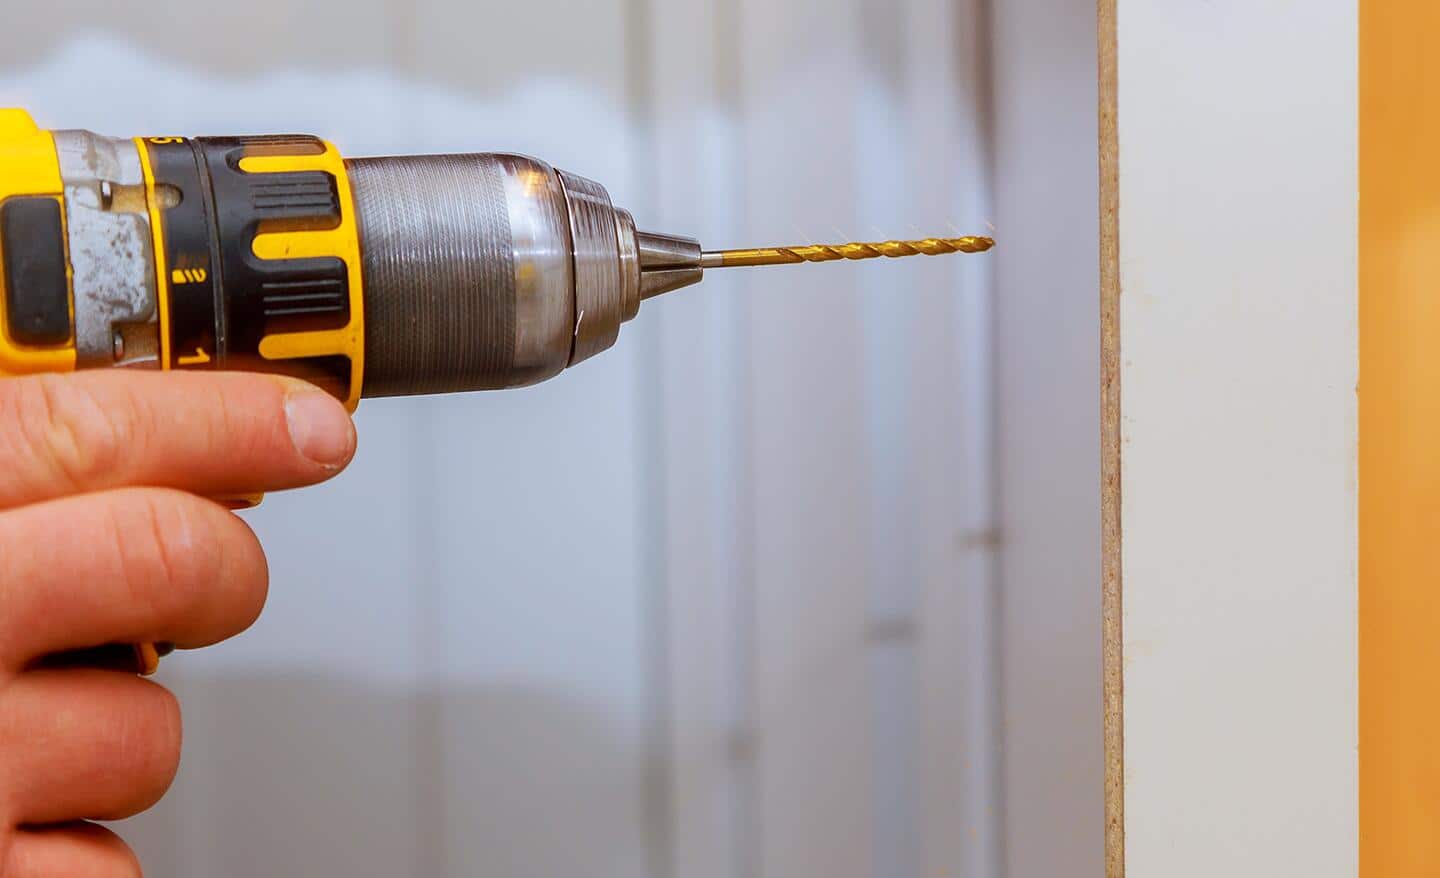 A person drills a screw into a cabinet.